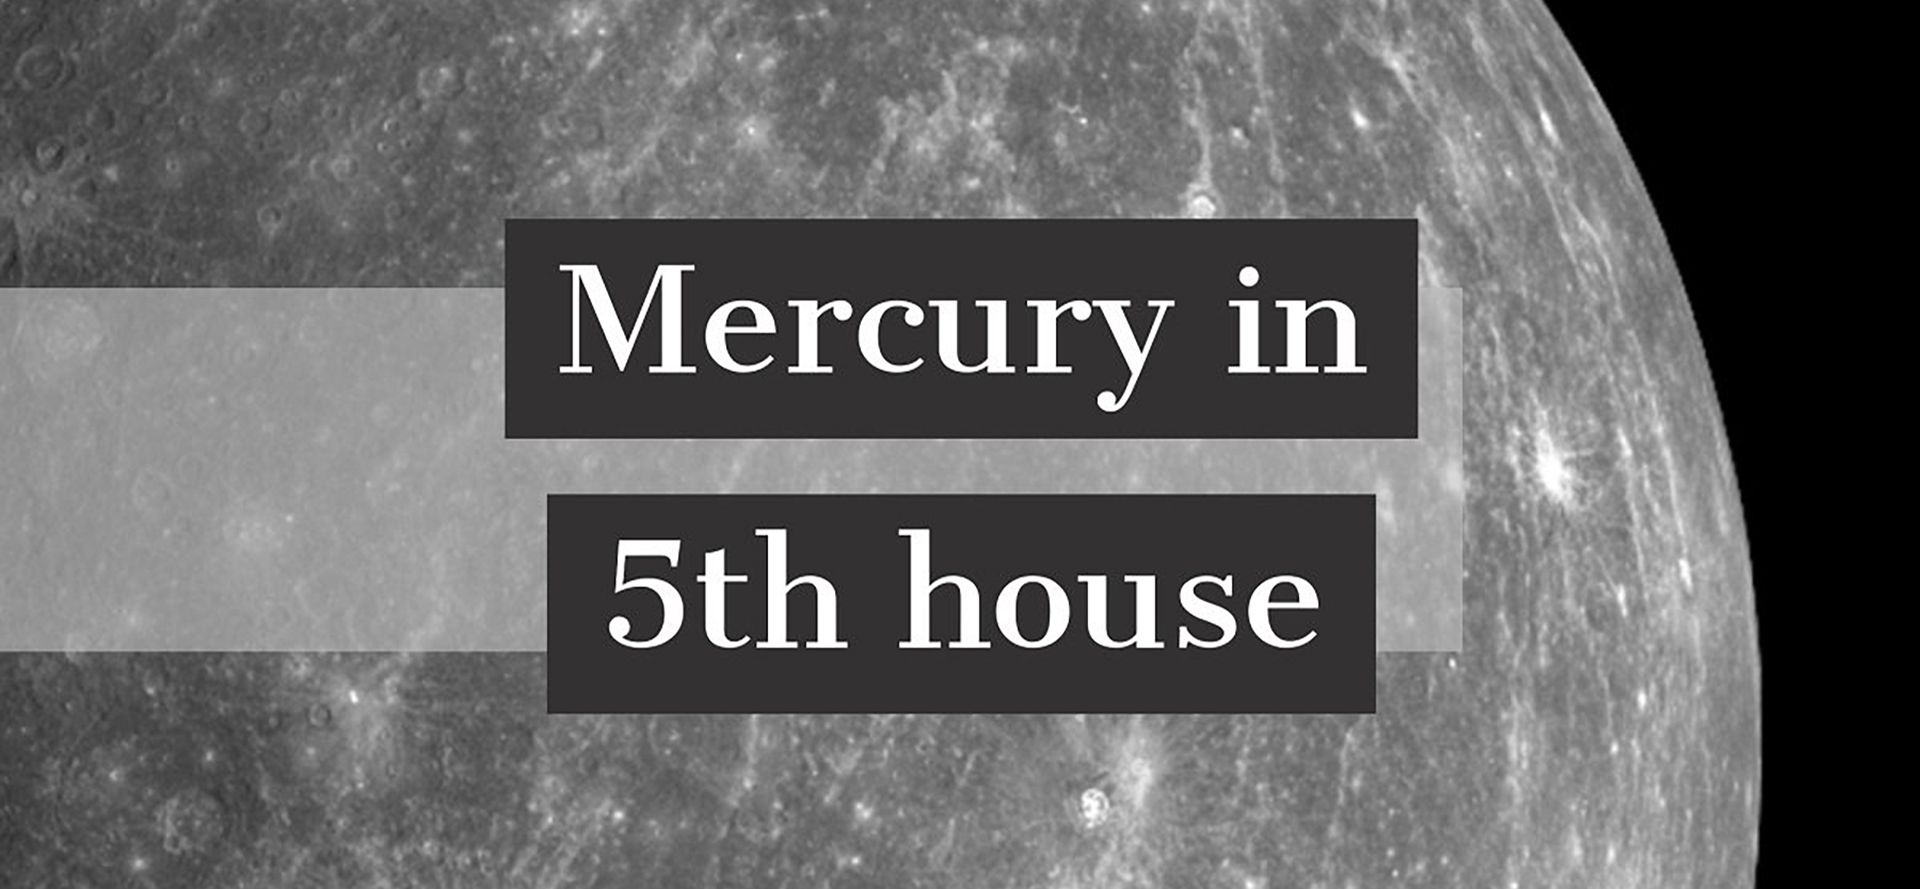 Mercury in 5th house.